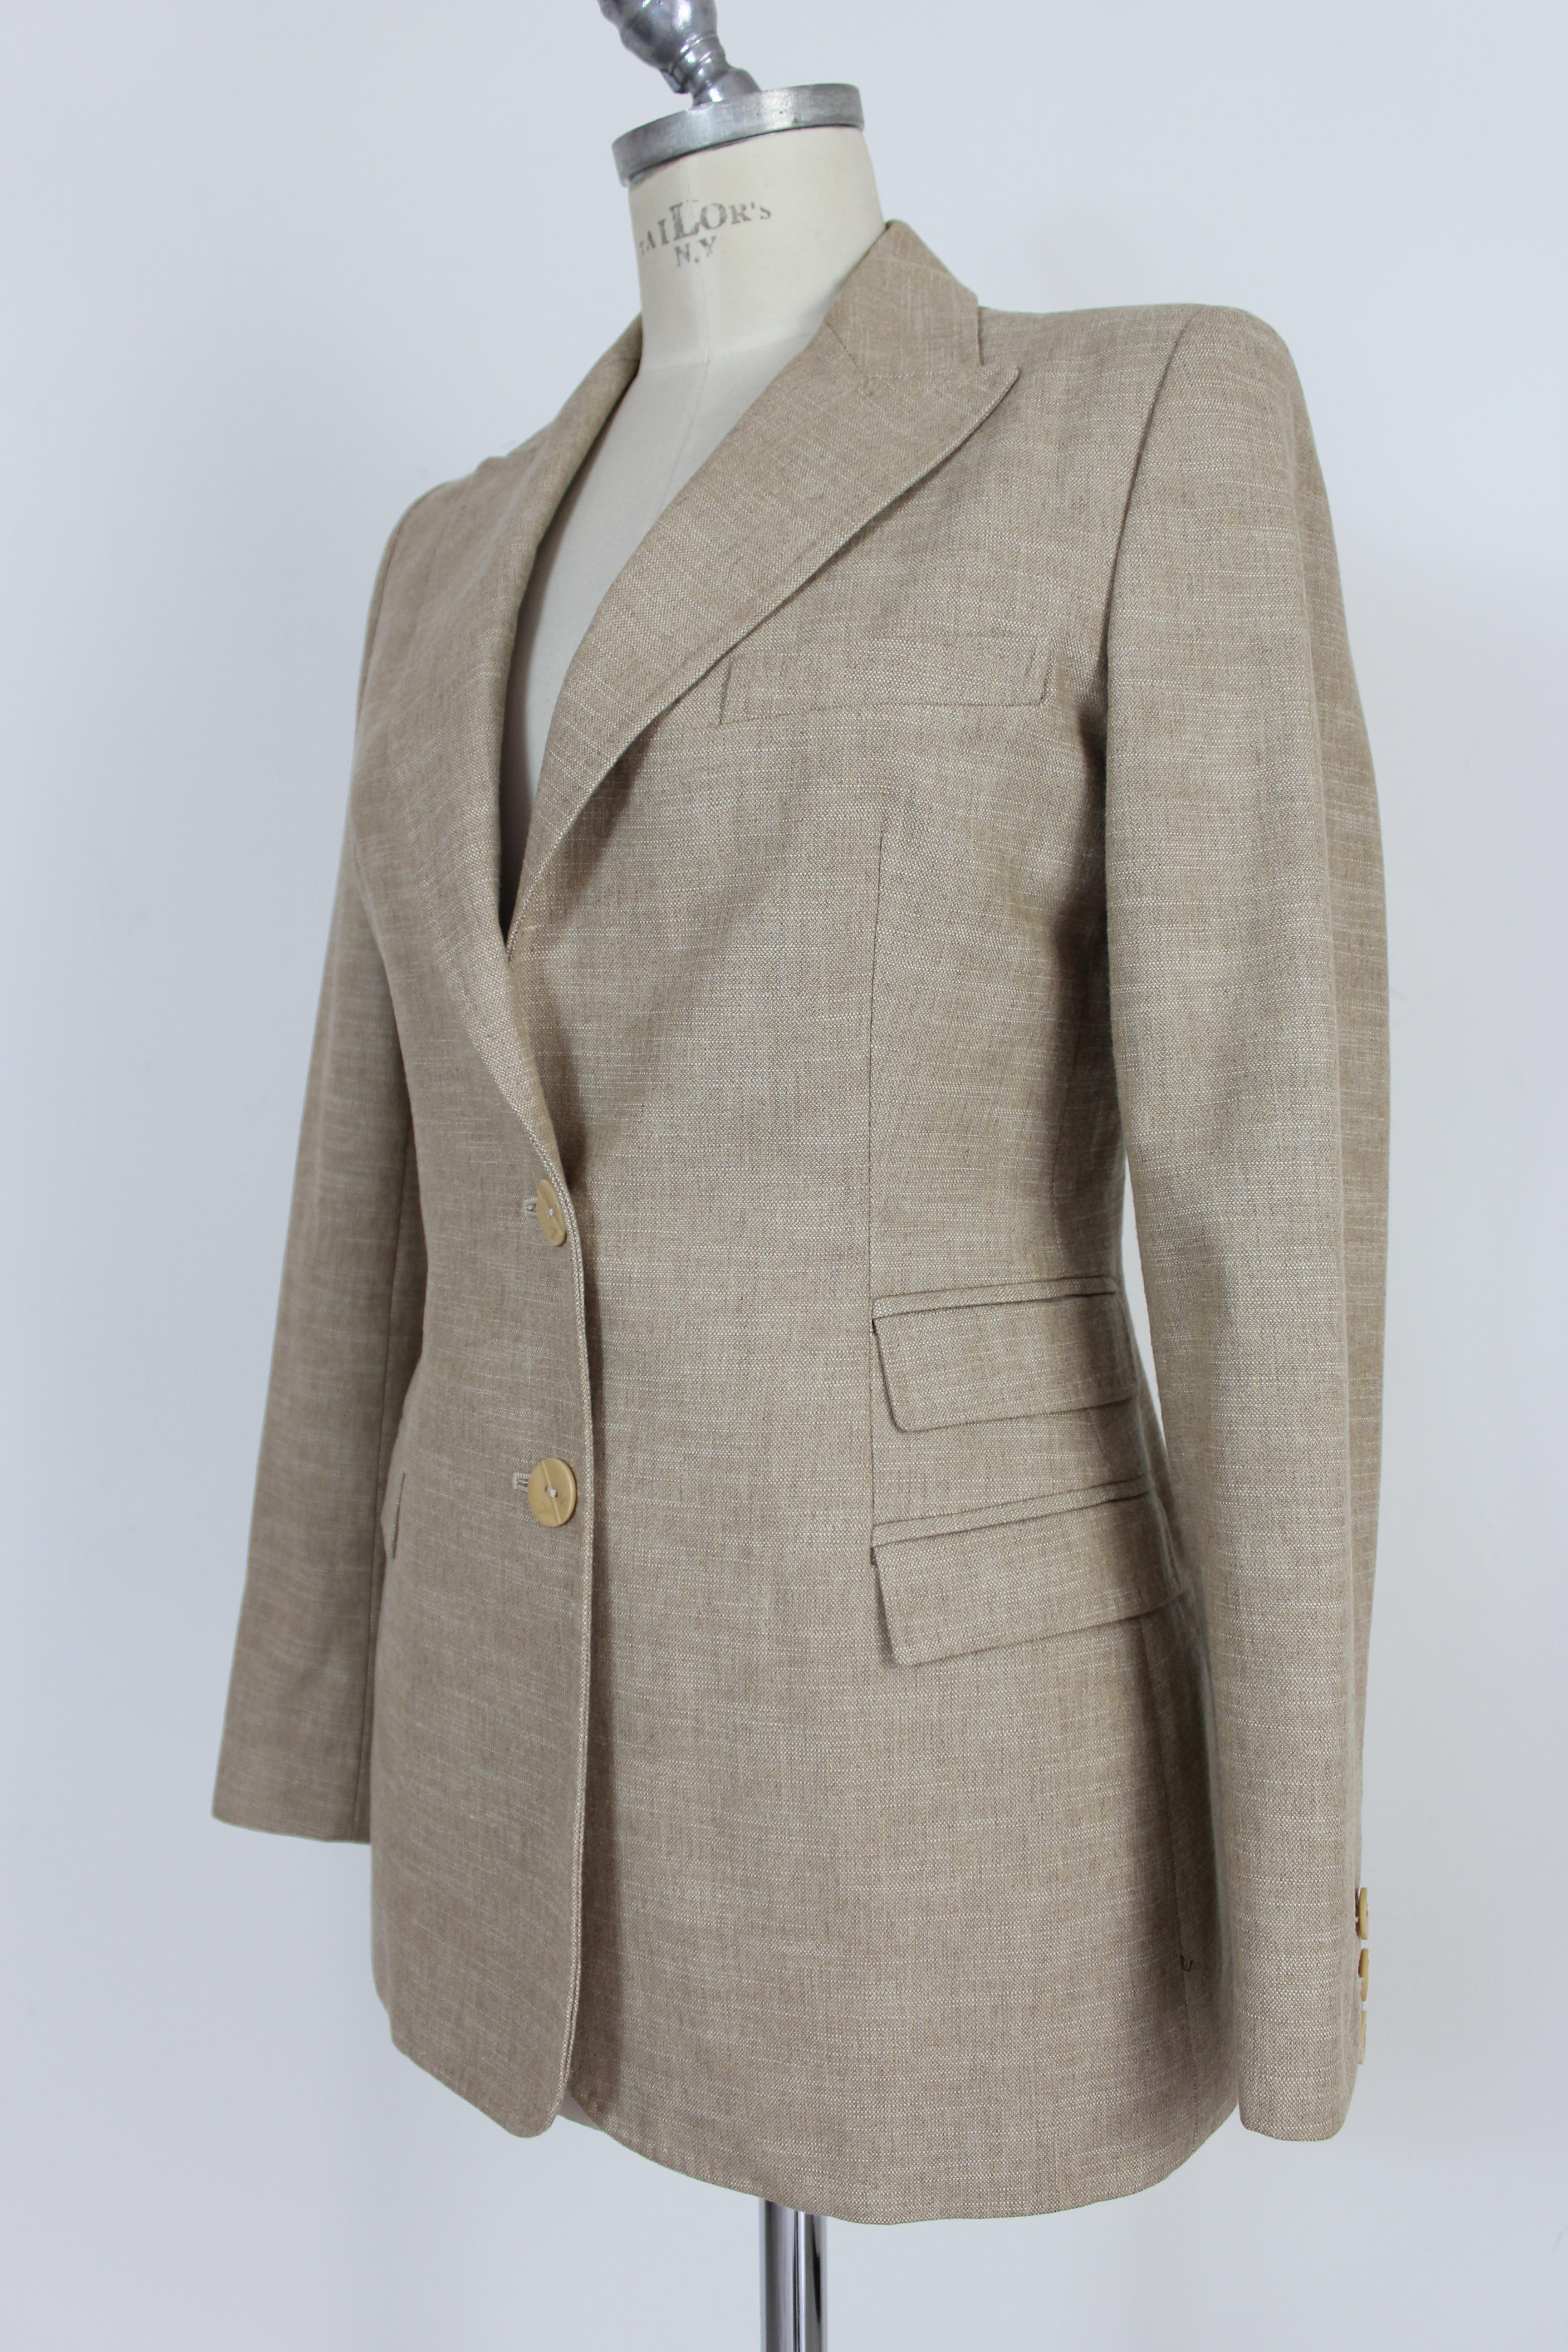 Women's Versace Beige Cotton and Linen Rabbit Hair Insert Slim Fit Blazers Jacket 1990s  For Sale